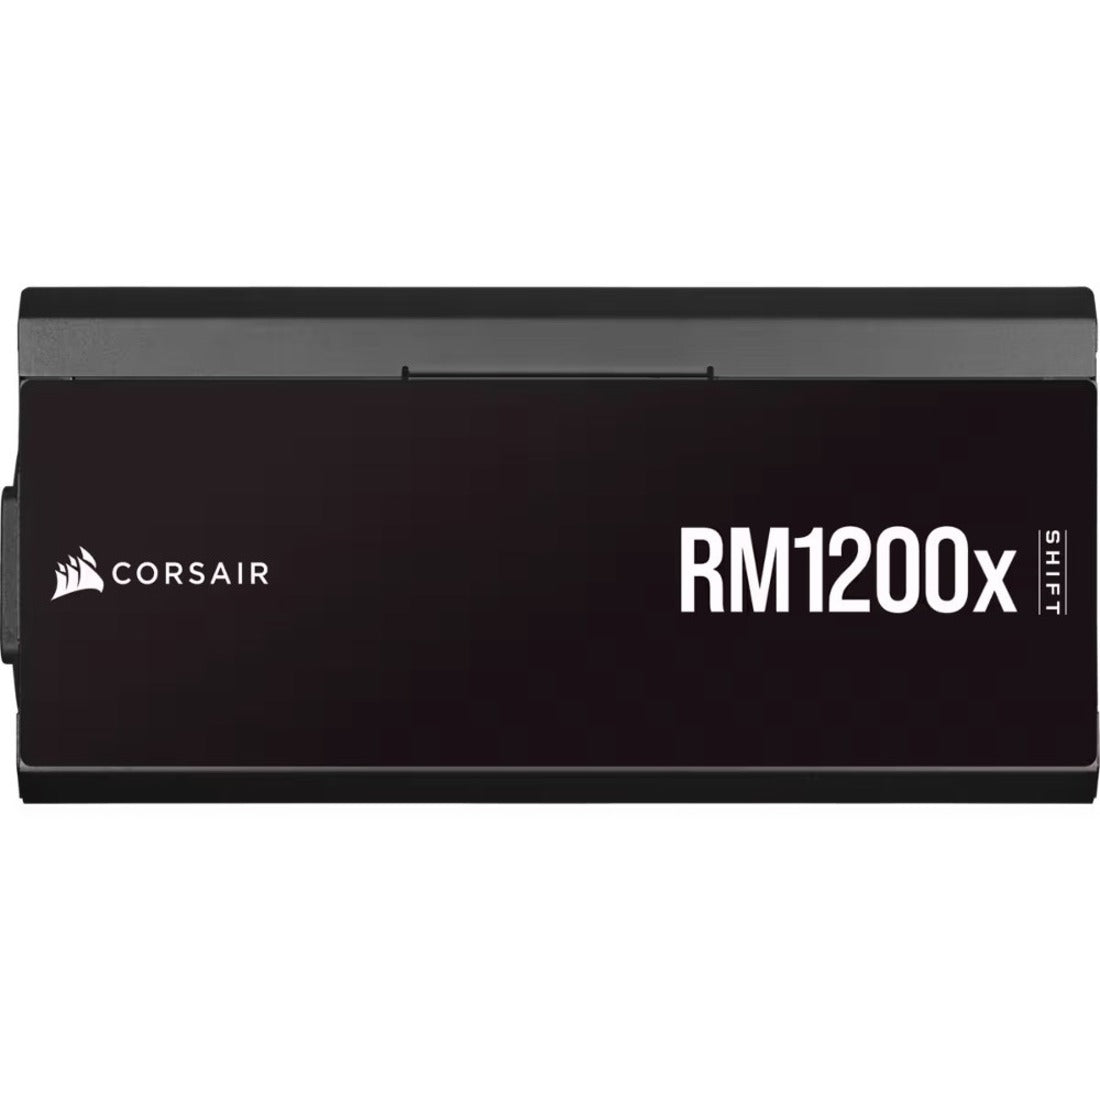 Corsair RM1200x Shift 80 Plus Gold Fully Modular ATX Power Supply